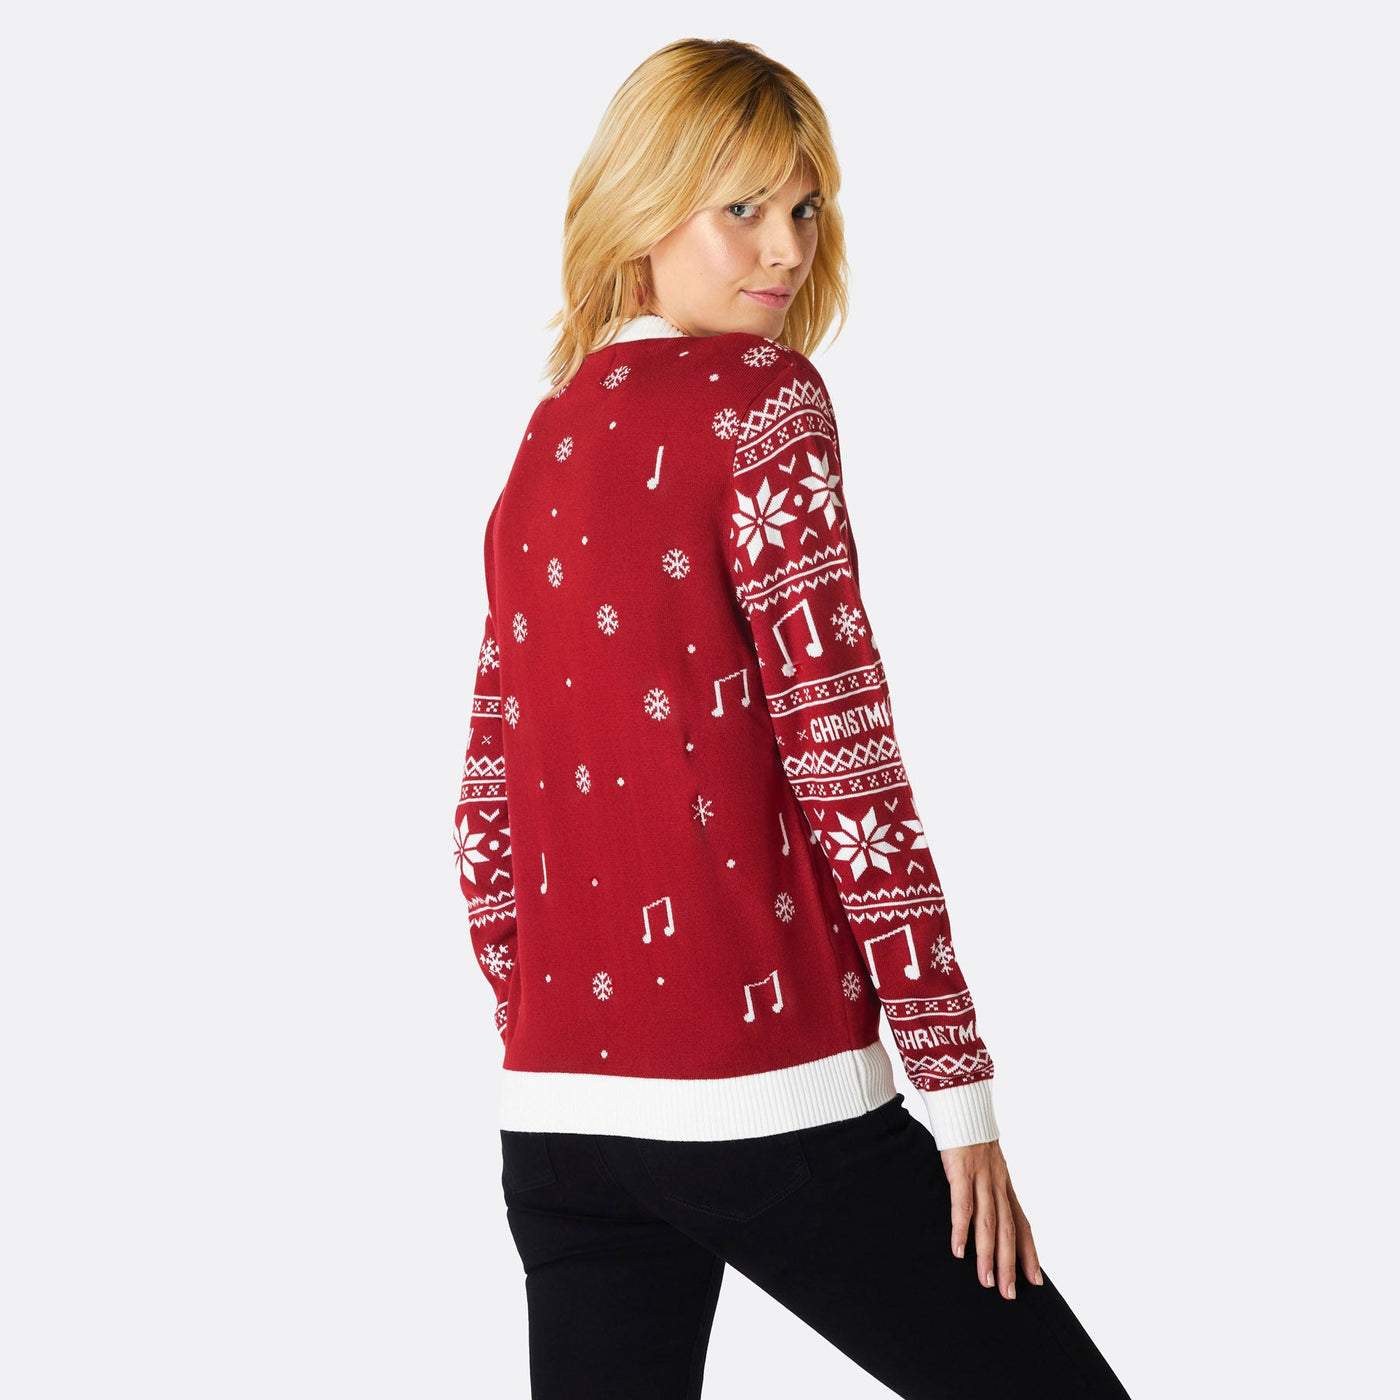 Women's Christmas Ohhhhh Christmas Sweater